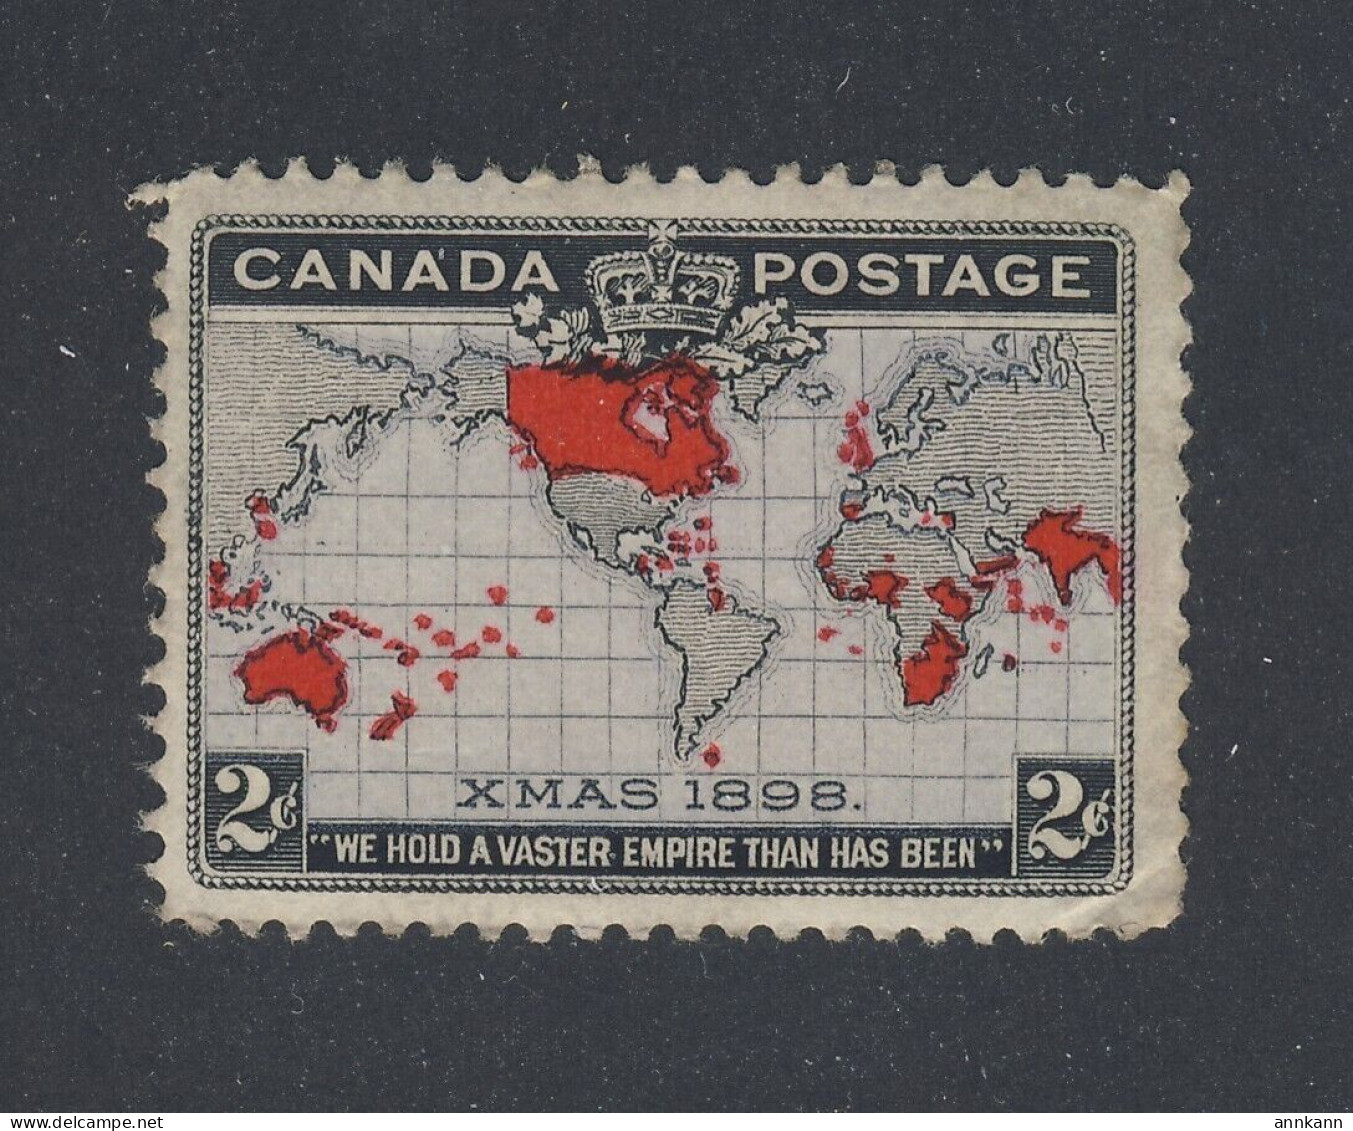 Canada 1898 Xmas Stamp; #86-2c MNH F/VF Guide Value = $55.00 - Ungebraucht